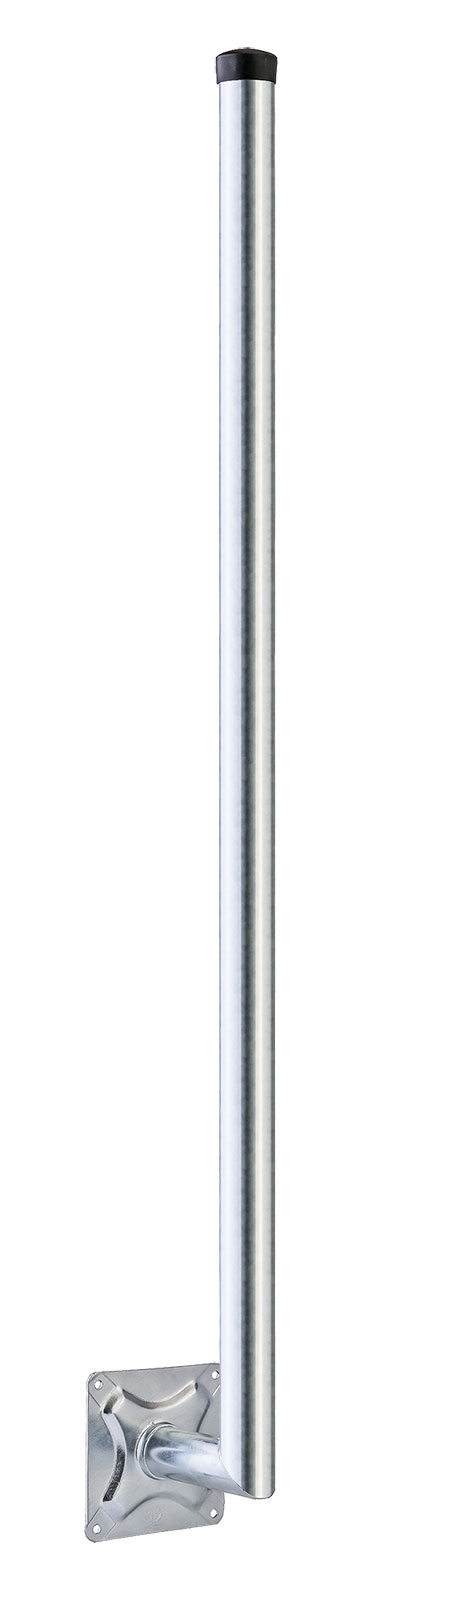 15cm Sat-Wandhalterung - XmediaSat XM-Line 050028 Achsmaß: 15 cm H: 150 cm Ø: 60 mm feuerverzinkt rostfrei